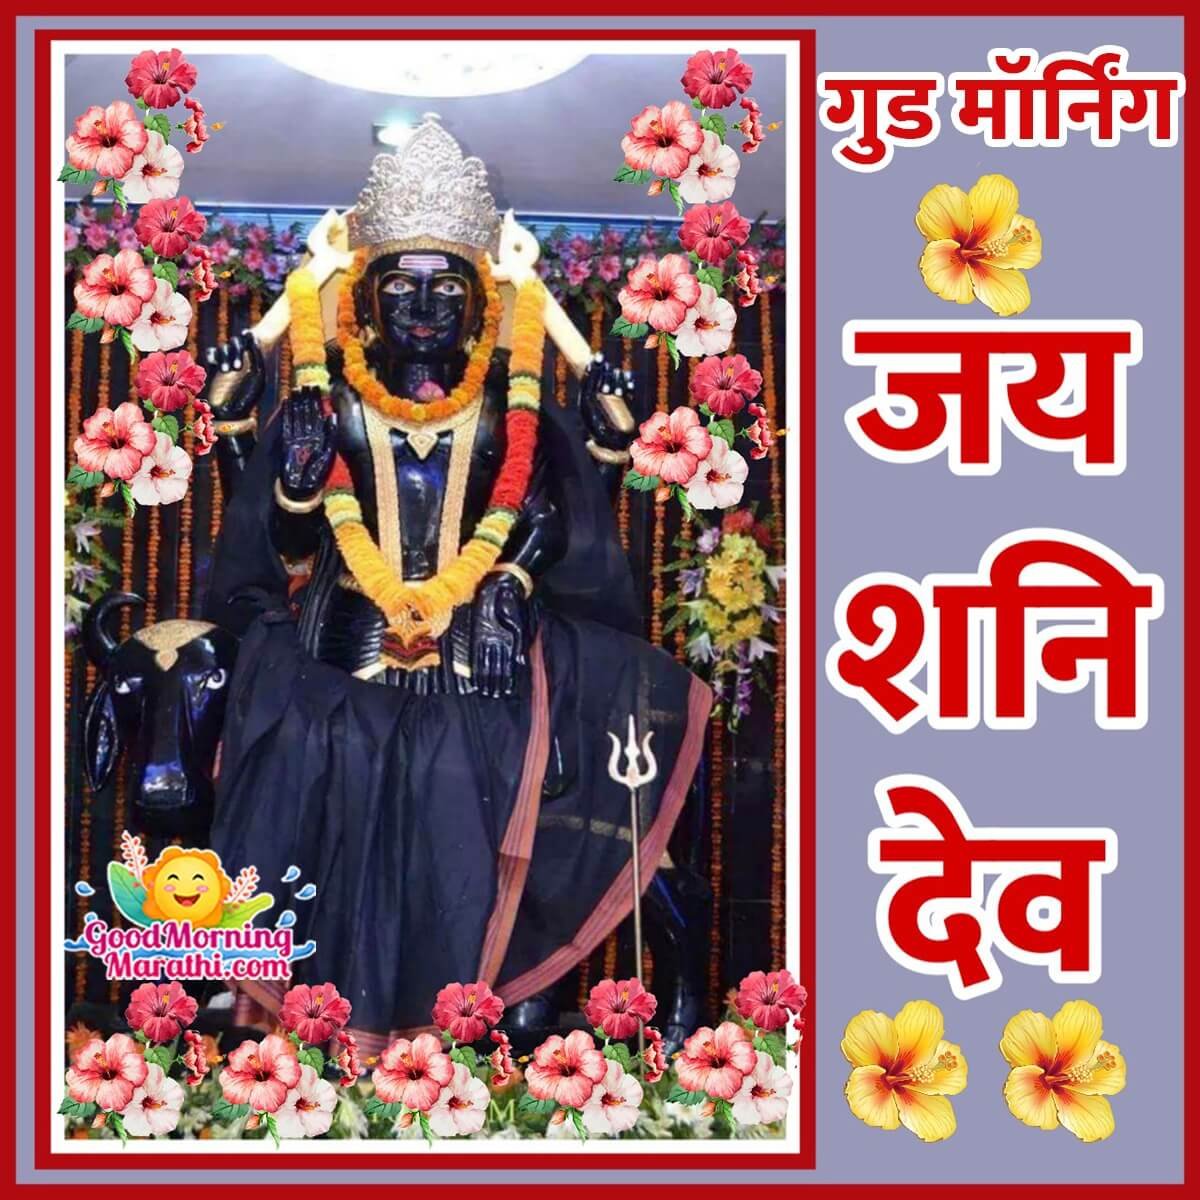 Good Morning Jai Shanidev Marathi Image